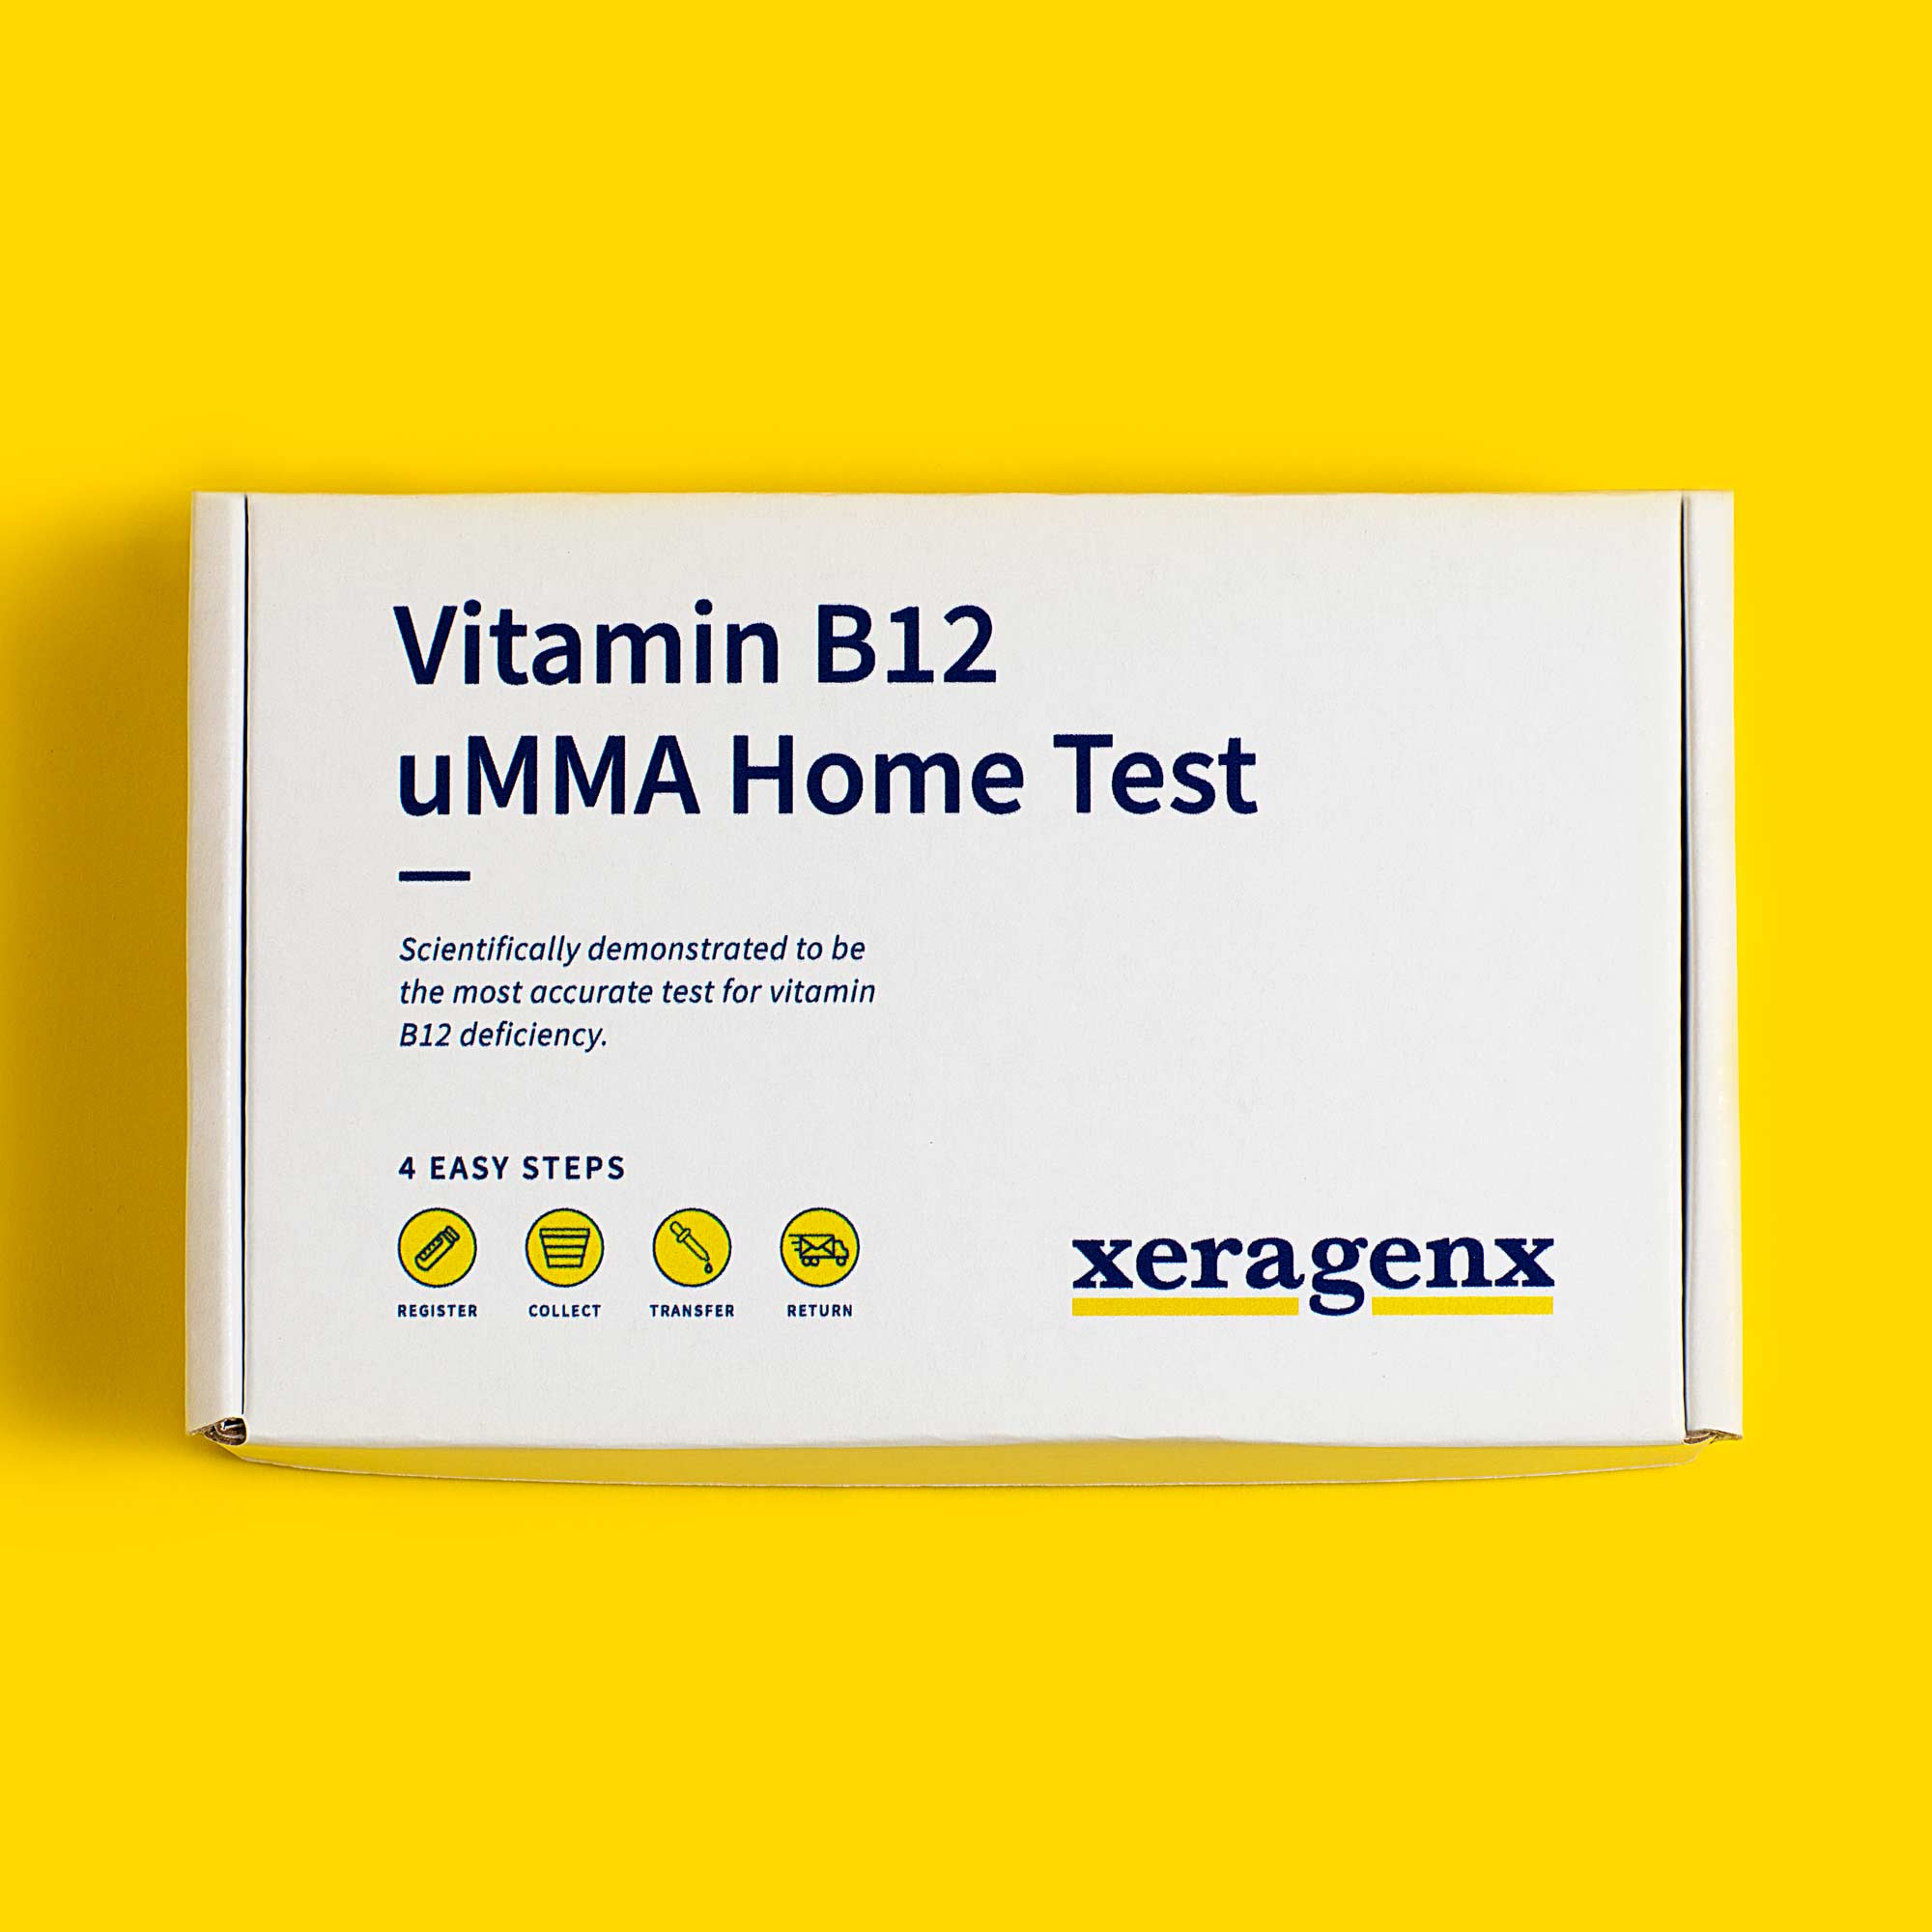 Vitamin B12 uMMA Home Test